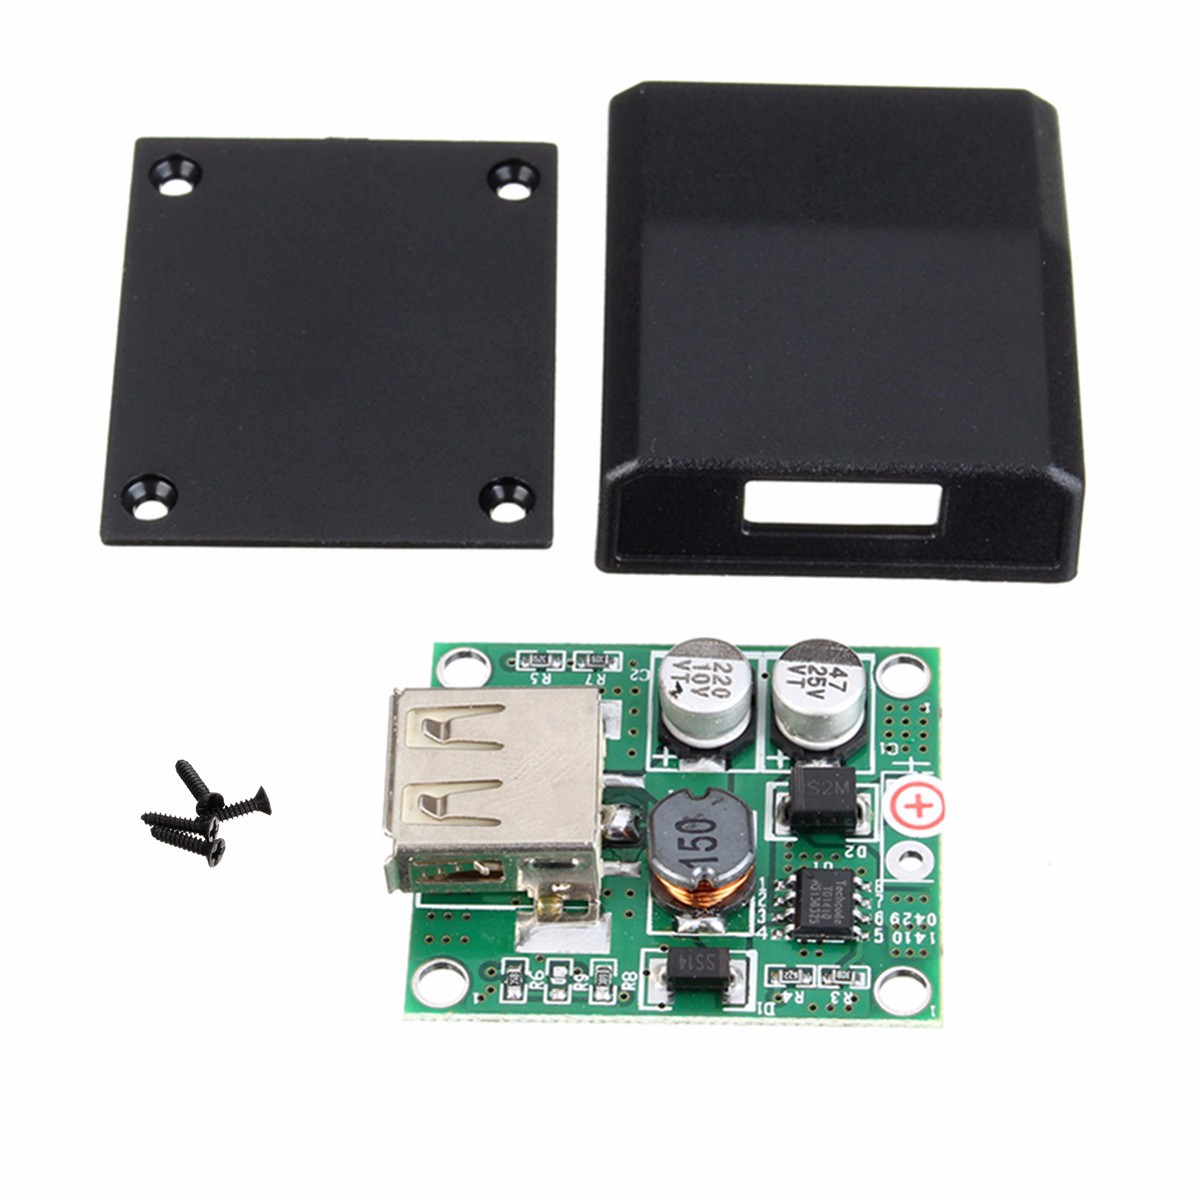 

5pcs DIY 5V 2A Voltage Regulator Junction Box Solar Panel Charger Special Kit For Electronic Production